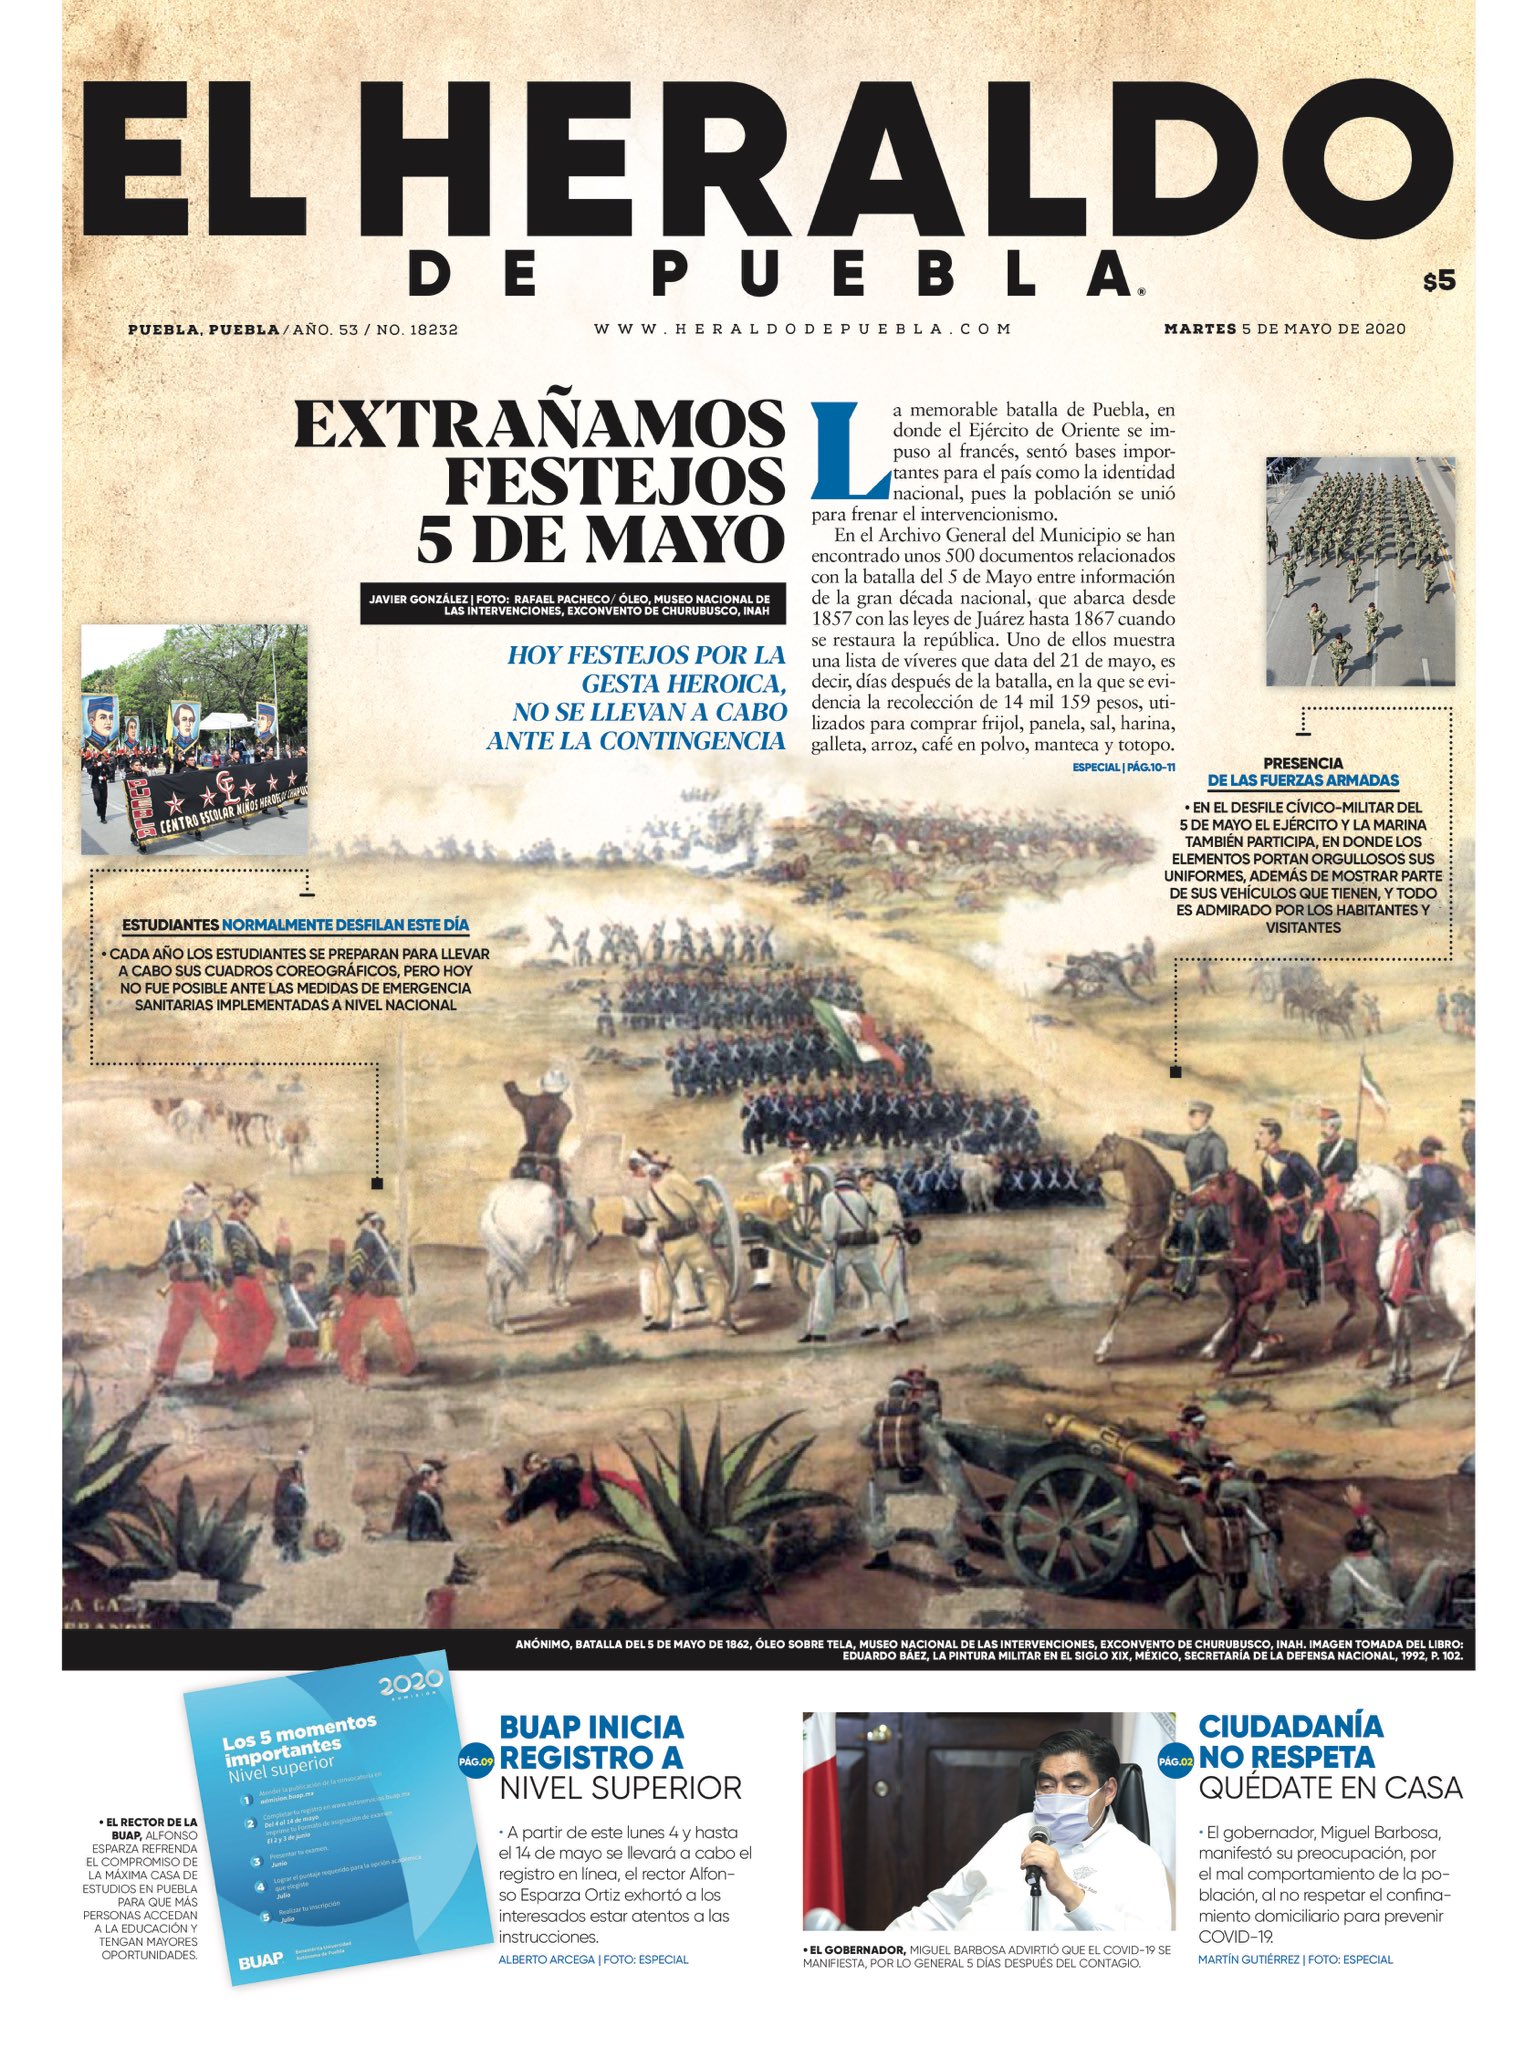 El Heraldo de Puebla on Twitter: 